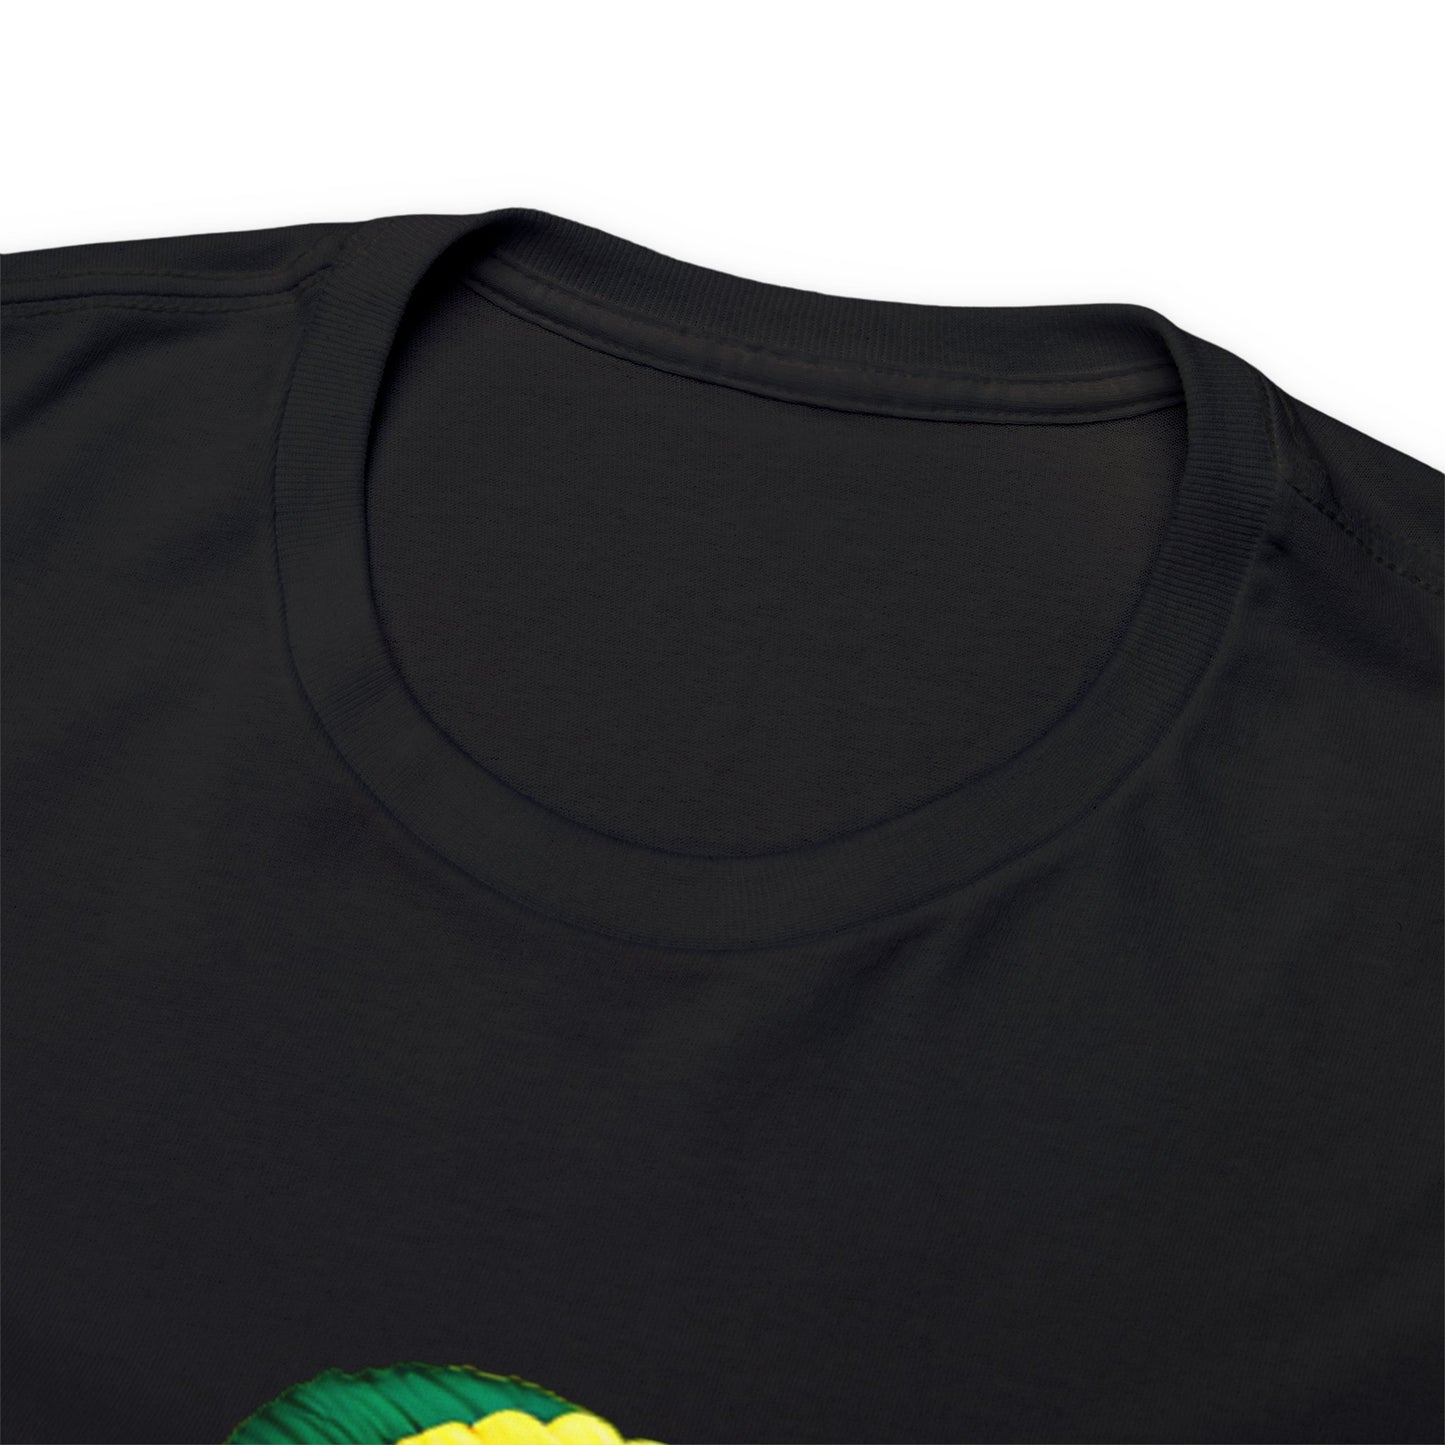 Black Man Jamaican Colors T-shirt - Unisex Heavy Cotton Tee